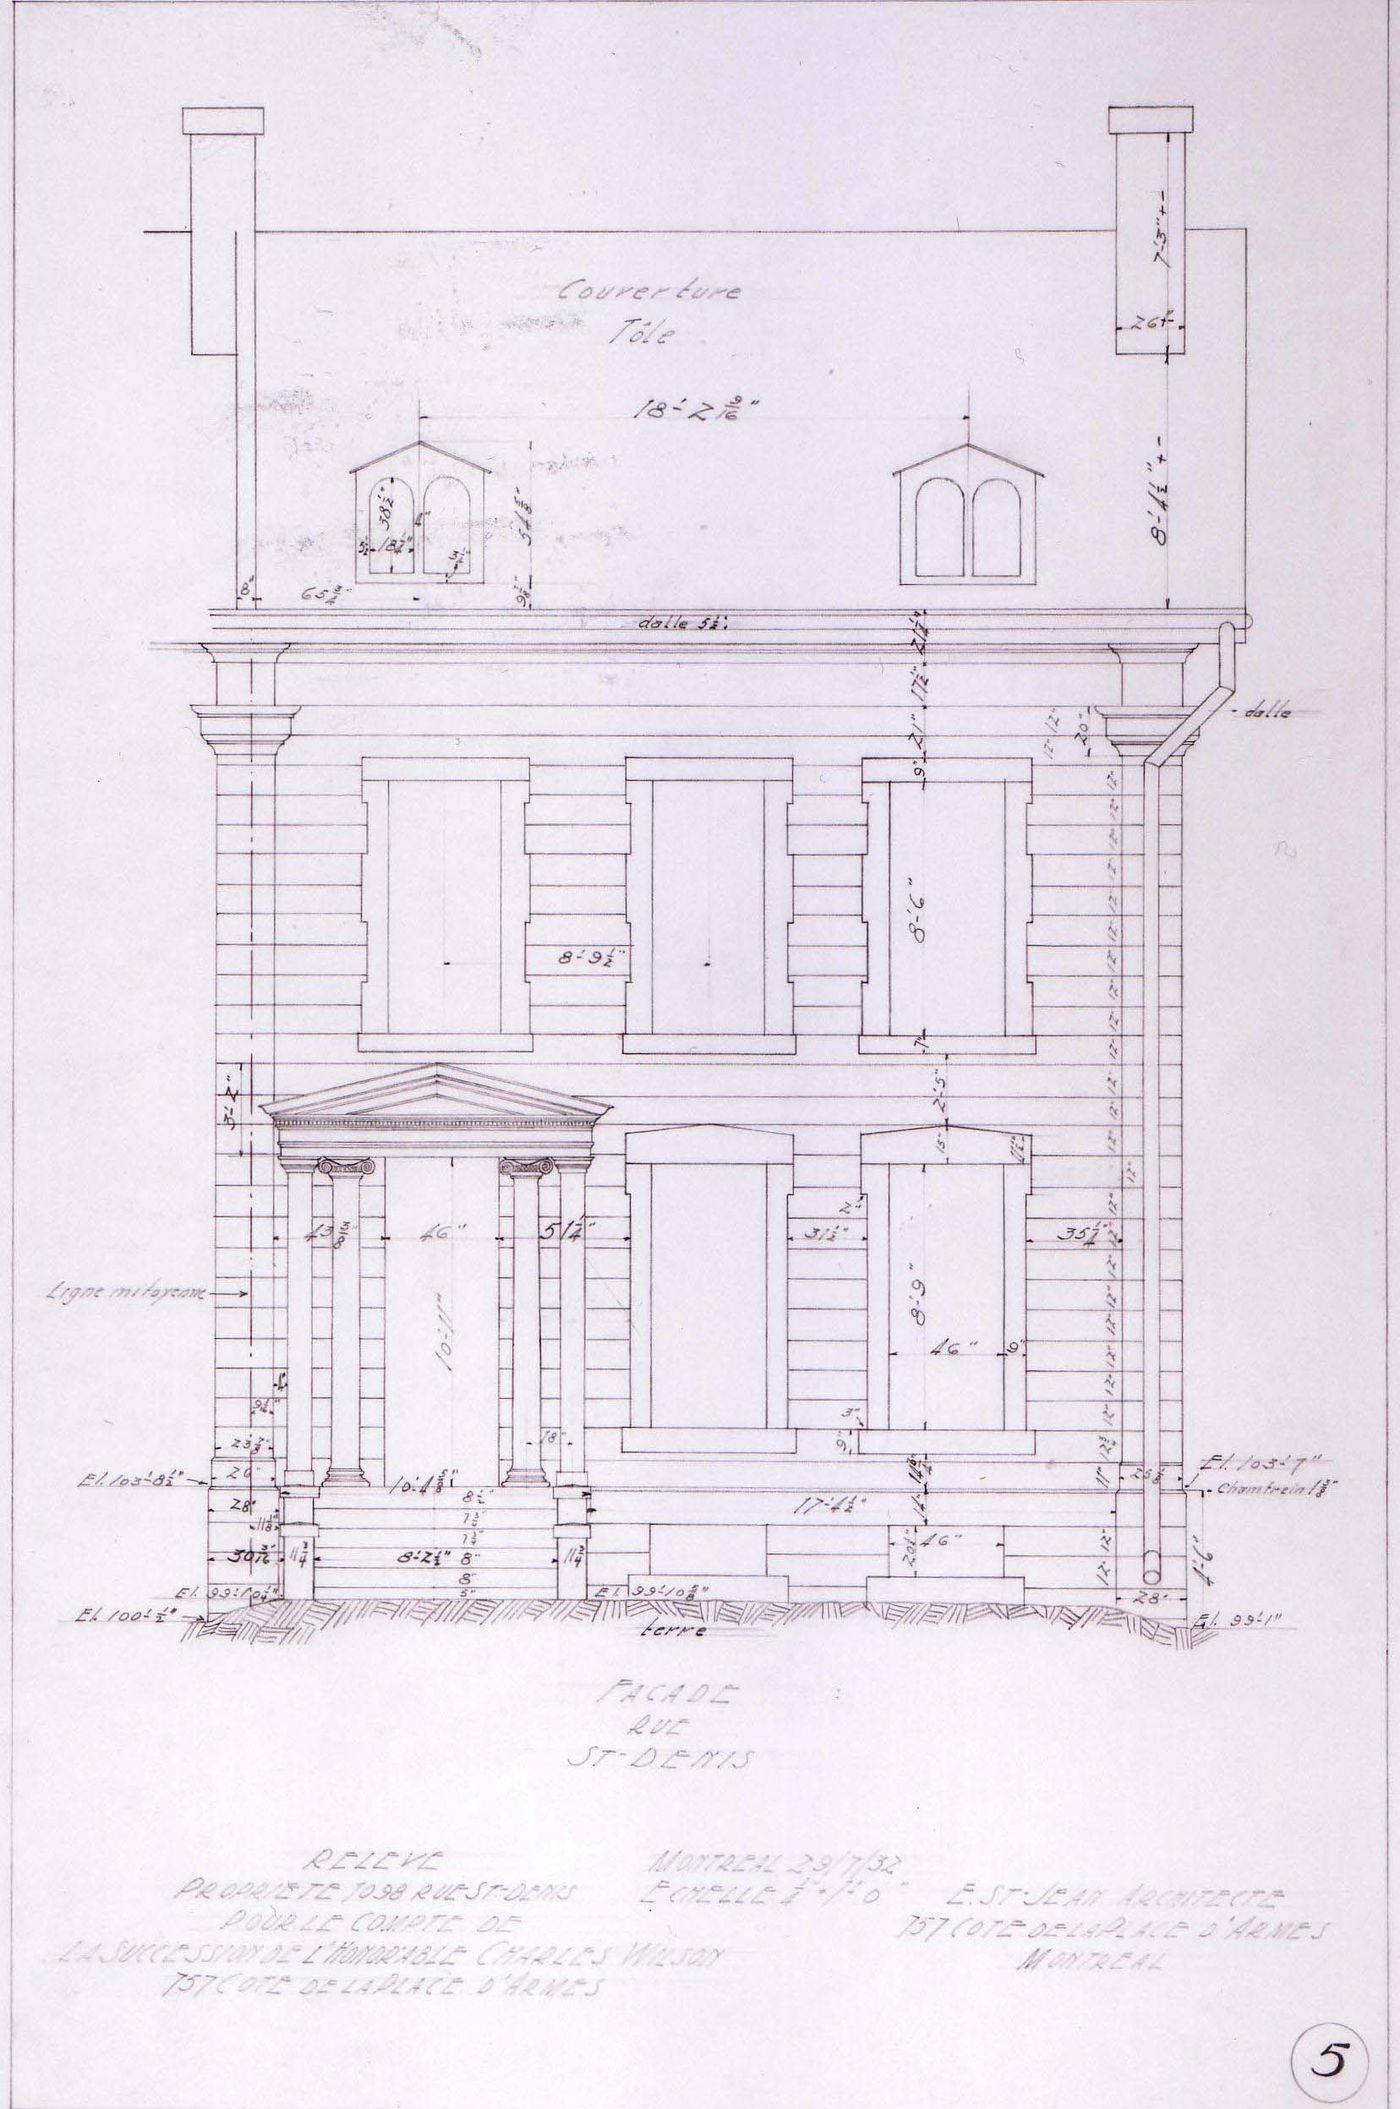 Principal elevation of the Charles Wilson residence, 1098 rue Saint-Denis, Montréal